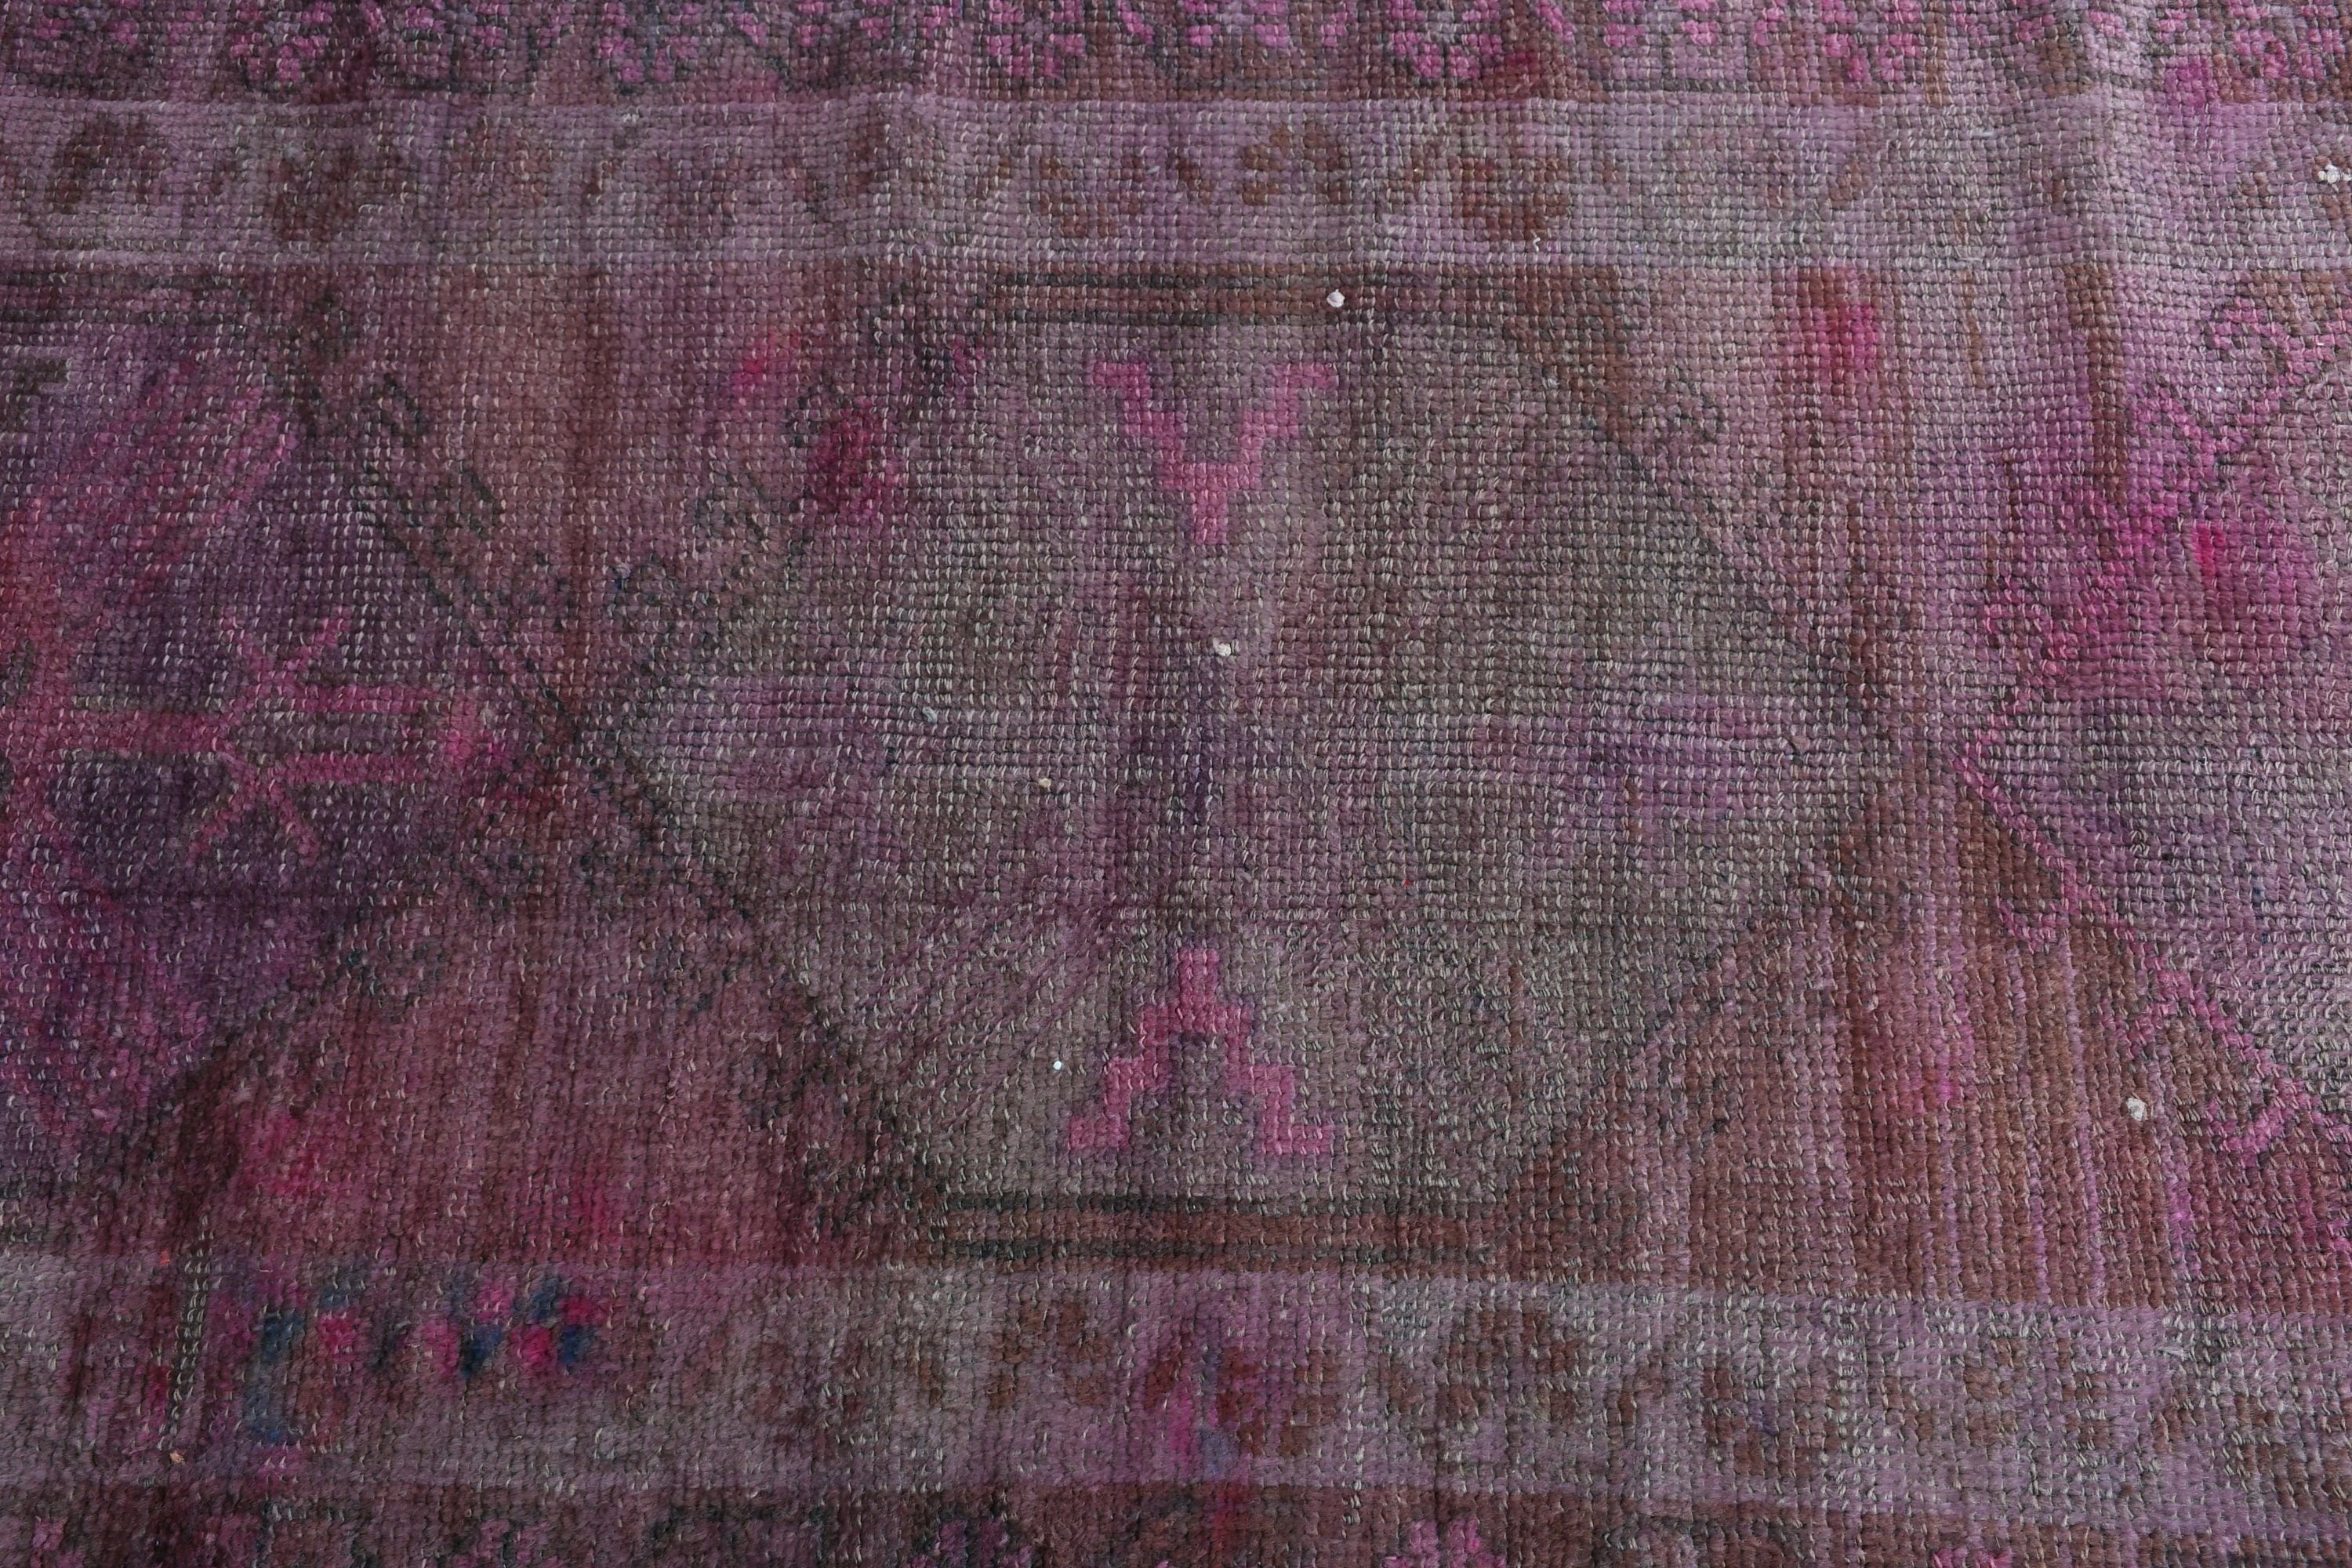 Anatolian Rug, Corridor Rug, Turkish Rug, 3.1x11.1 ft Runner Rug, Rugs for Runner, Wool Rug, Pink Oushak Rug, Hand Knotted Rug, Vintage Rug